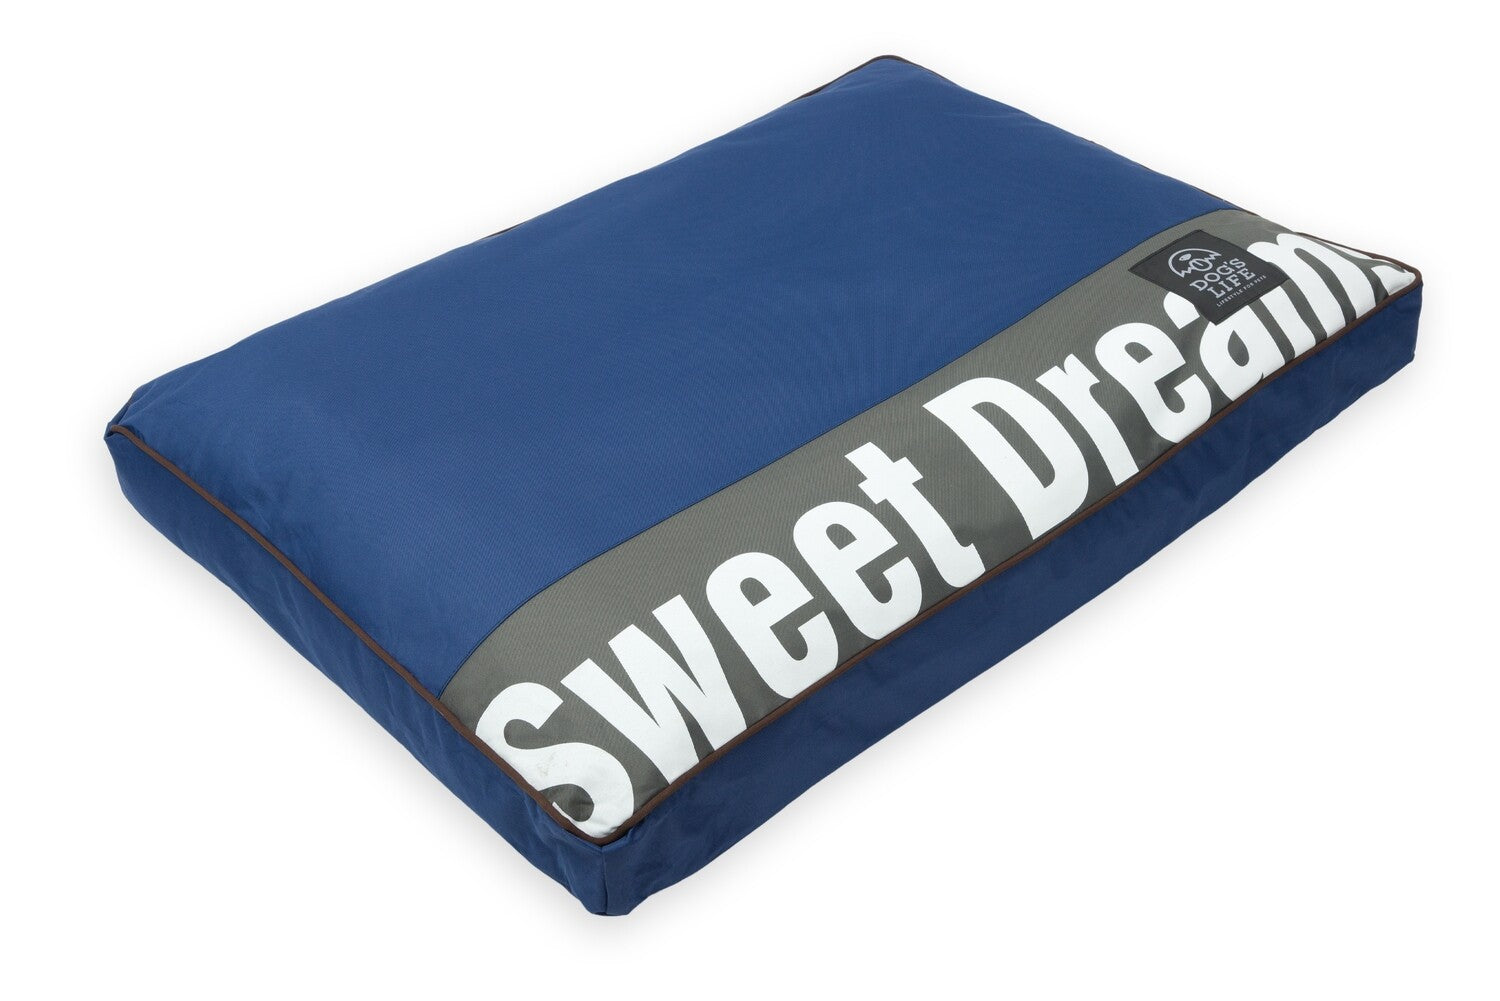 Dog's Life Sweet Dreams Cushion - Blue